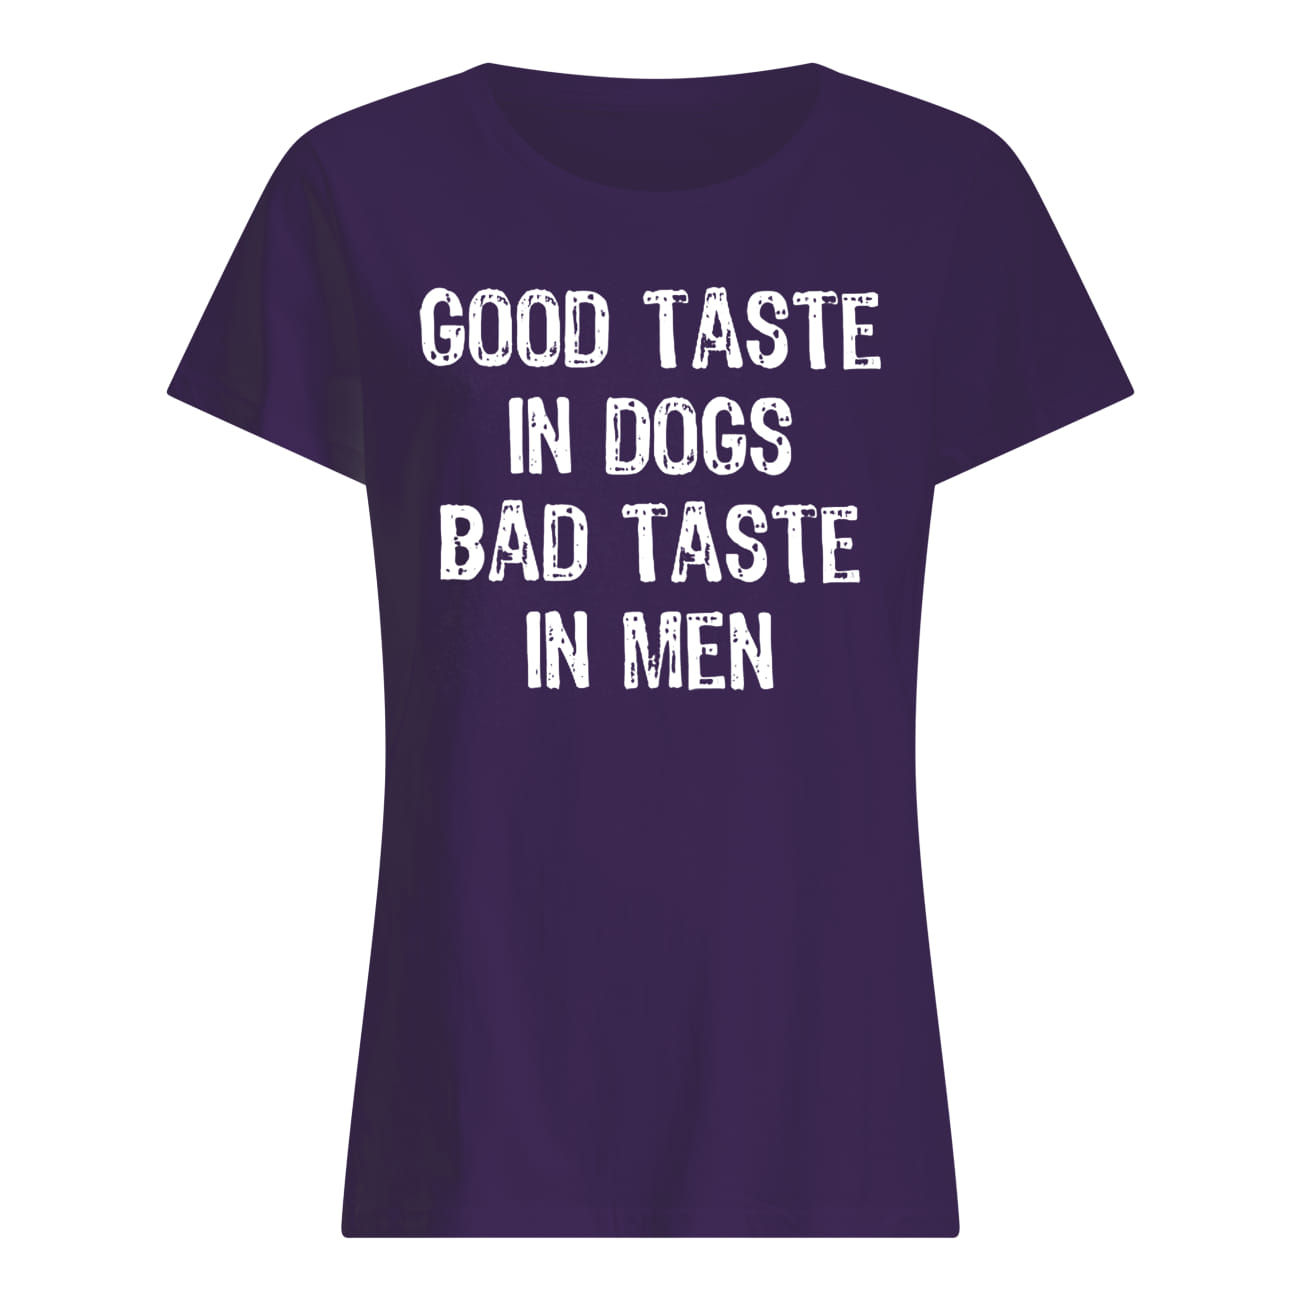 Good taste in dogs bad taste in men lady shirt